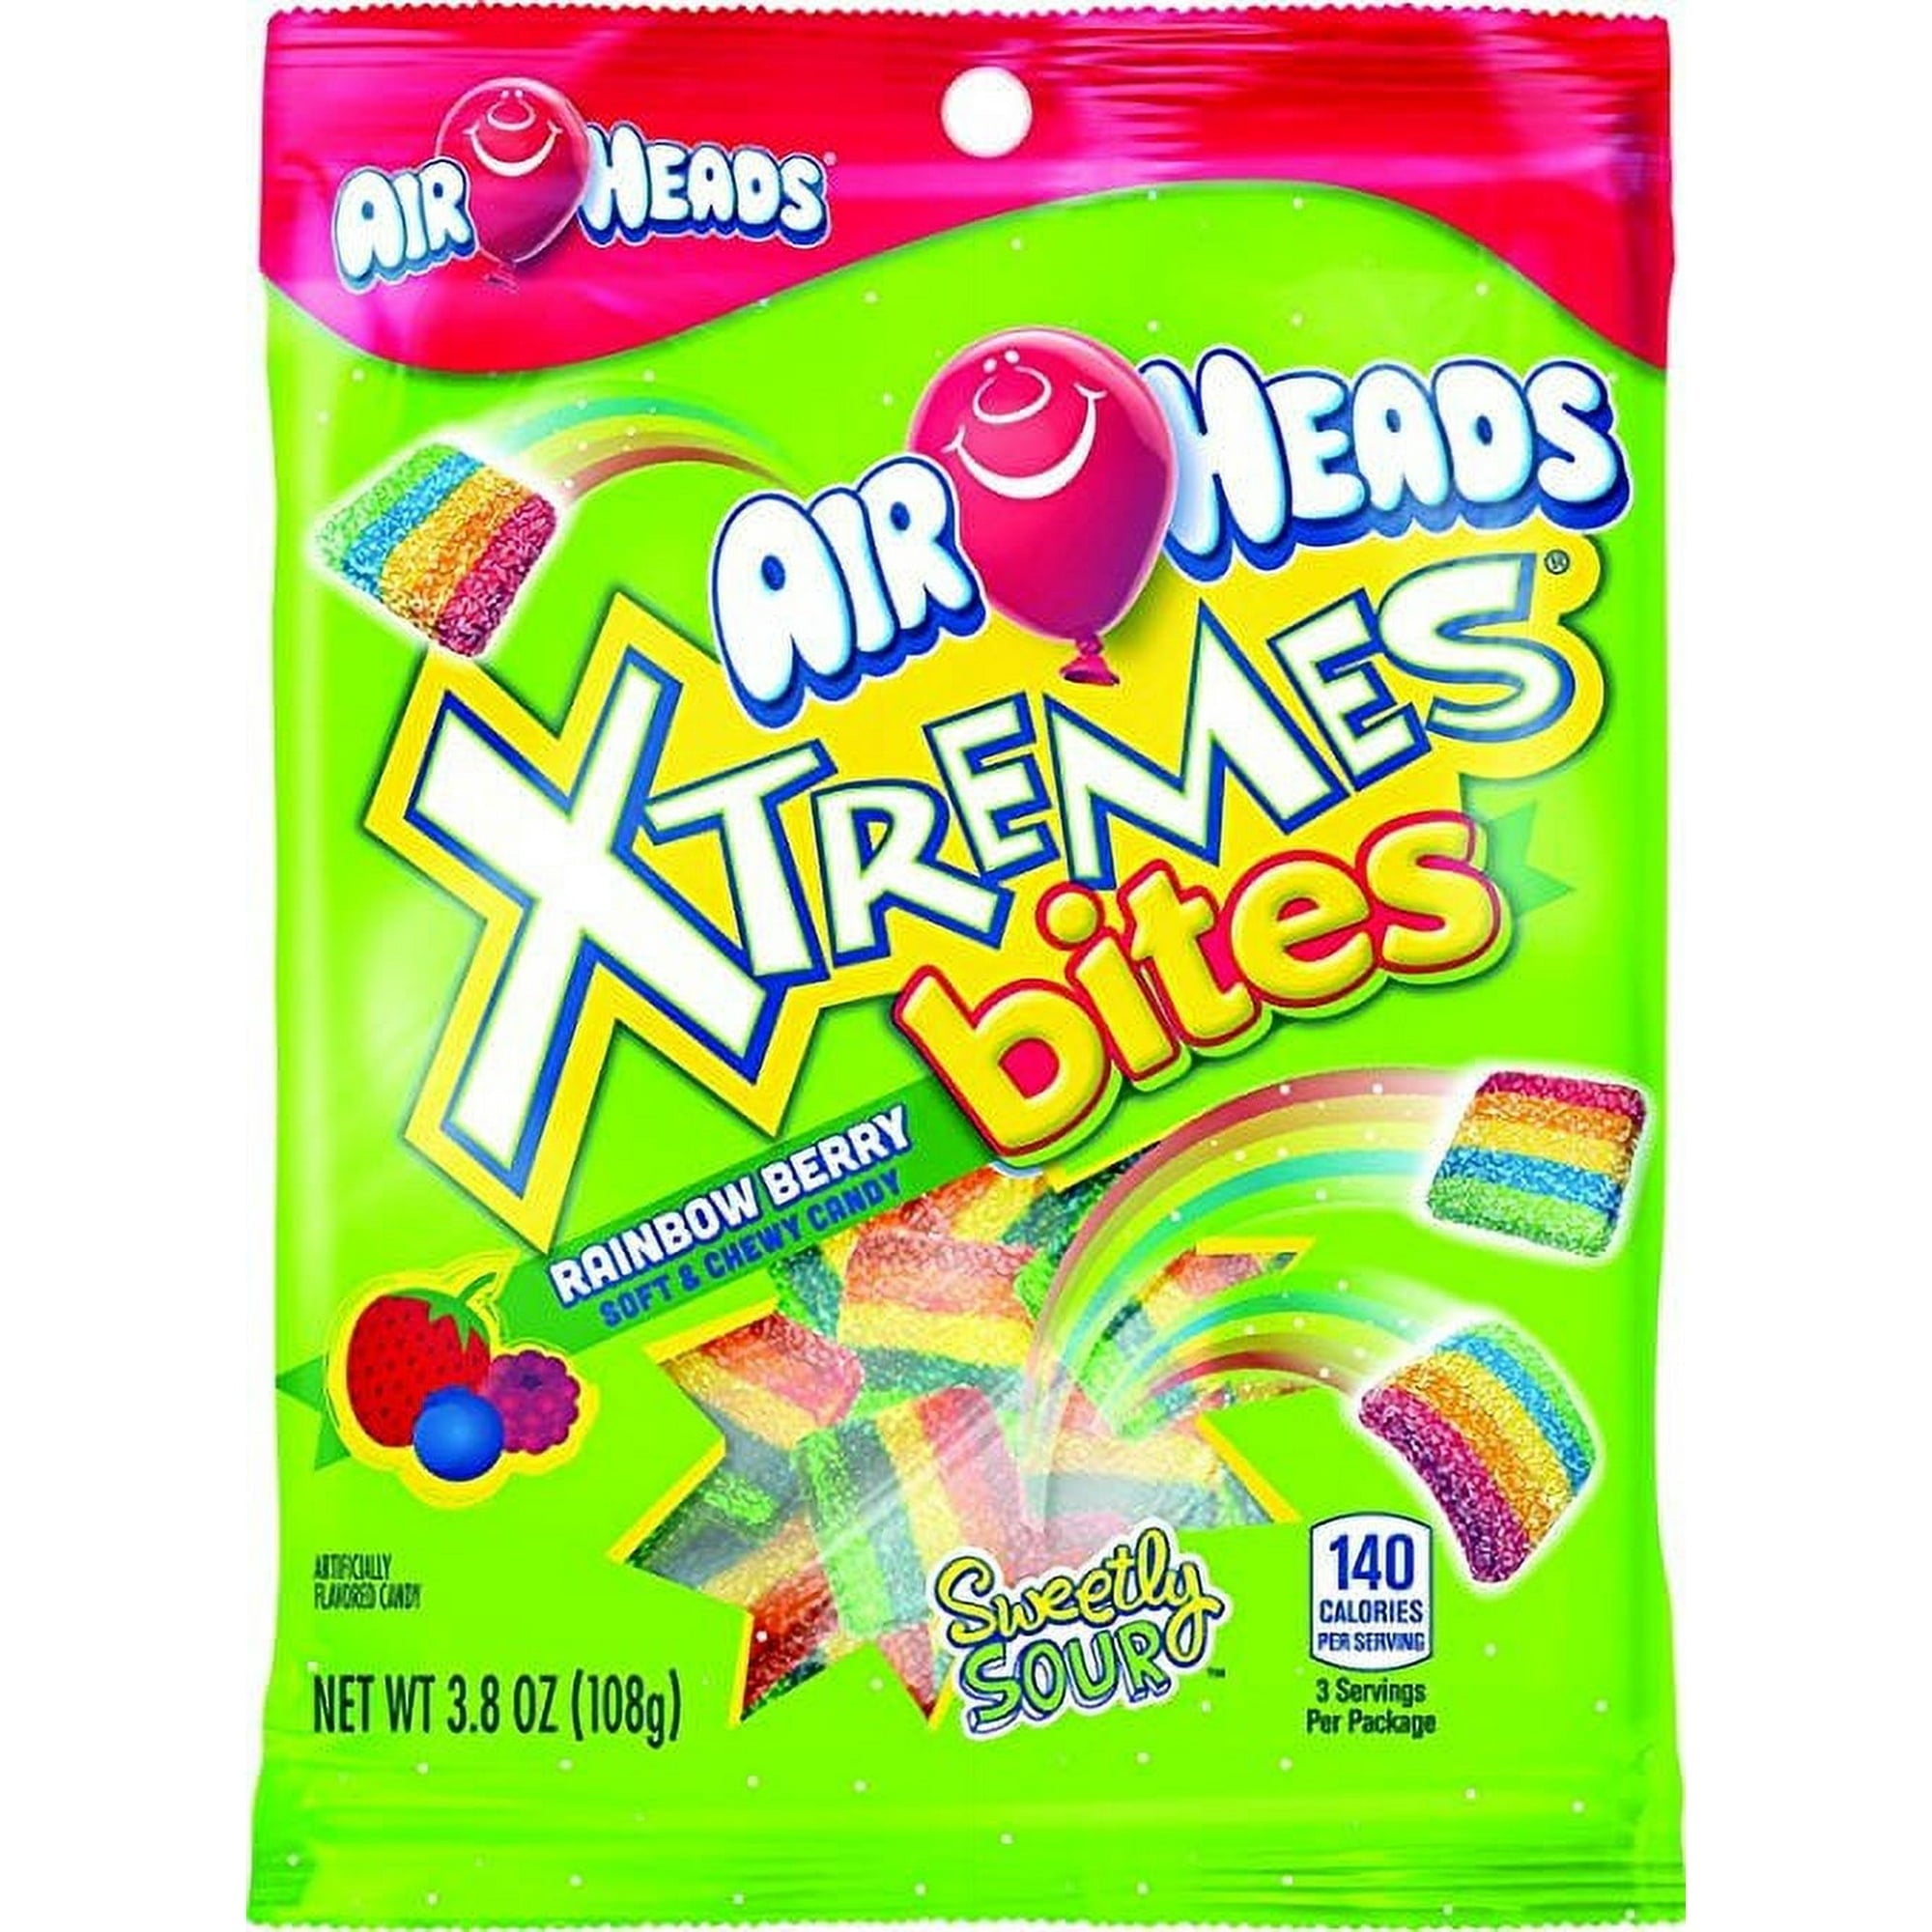 Air Heads Xtremes Candy Rainbow Berry Bites 3.8 Oz Bag